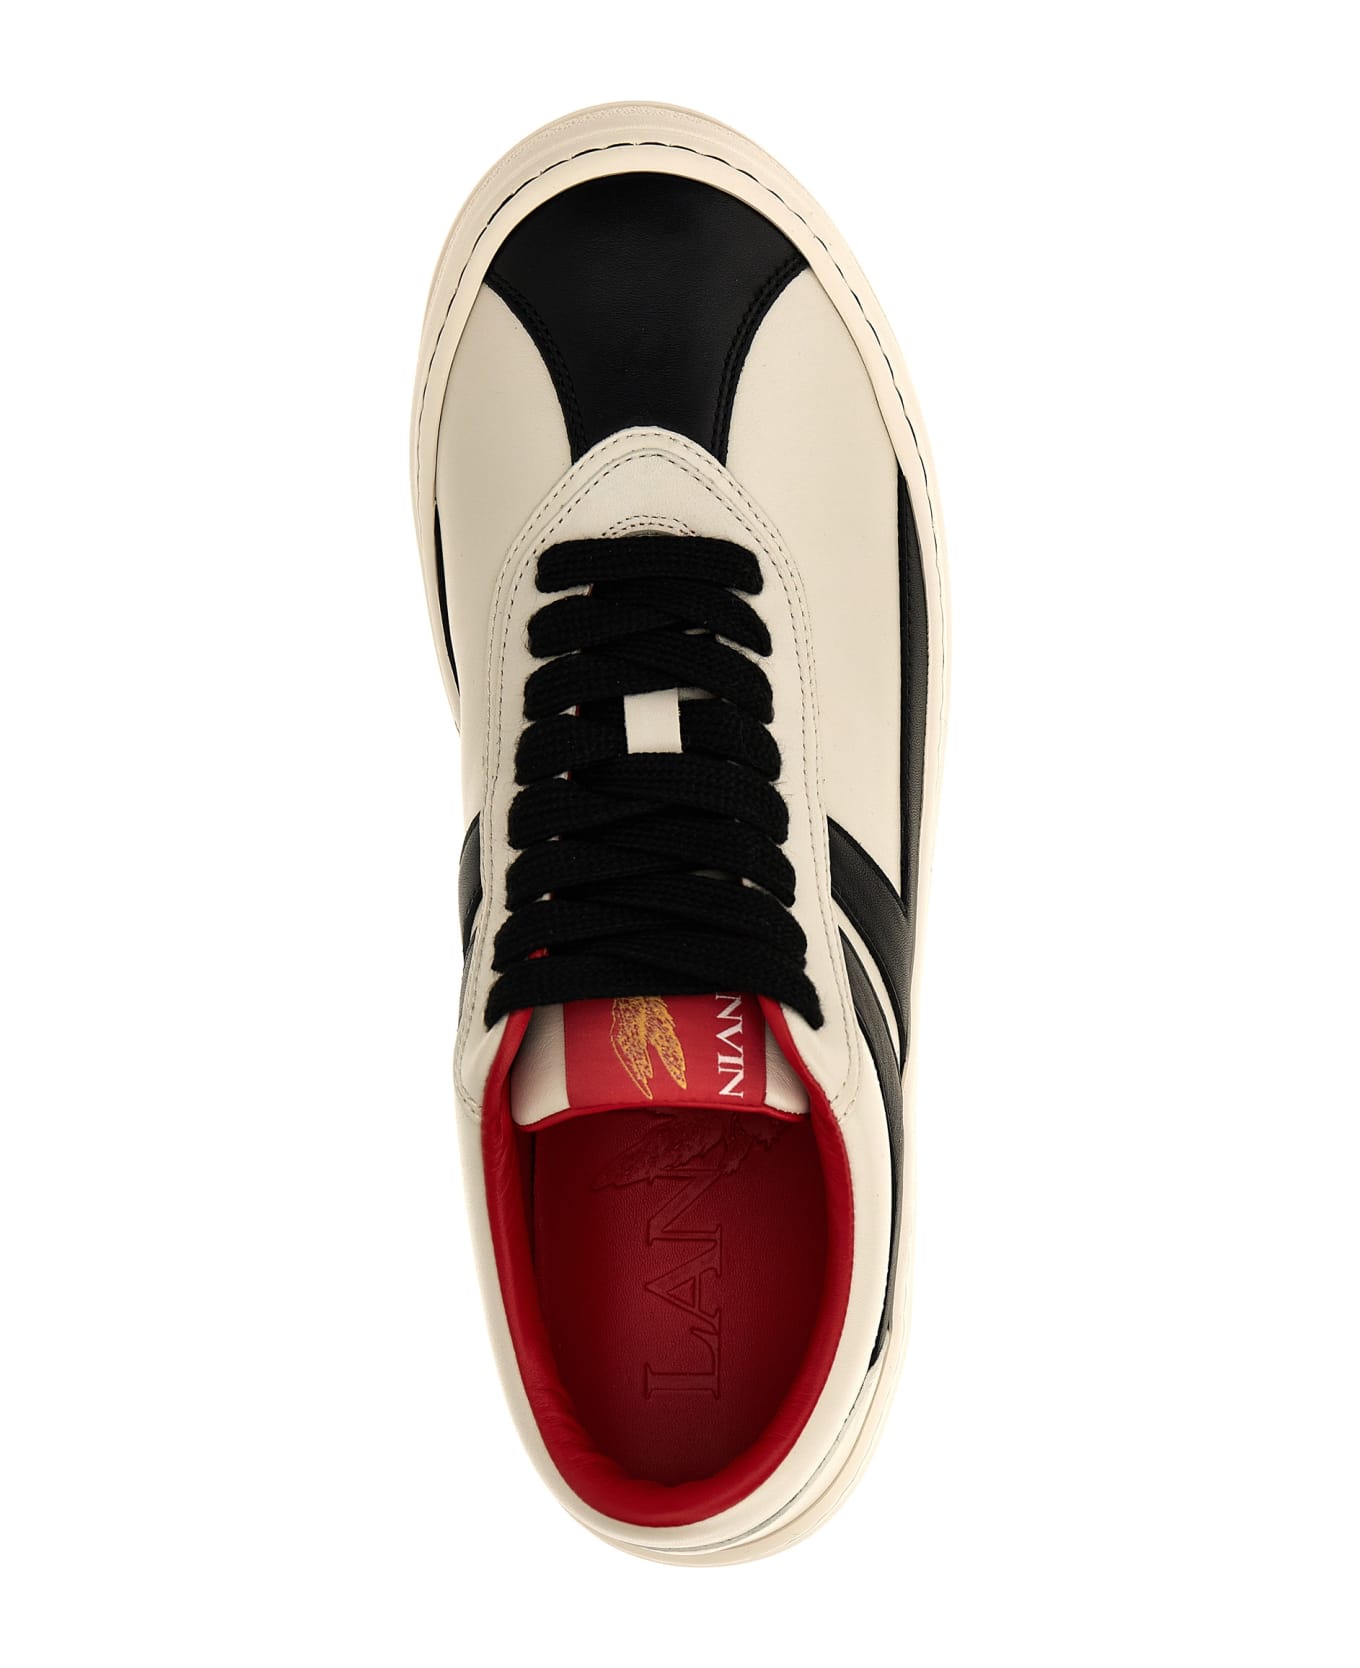 Lanvin 'lanvinxfuture' Sneakers - White/Black スニーカー